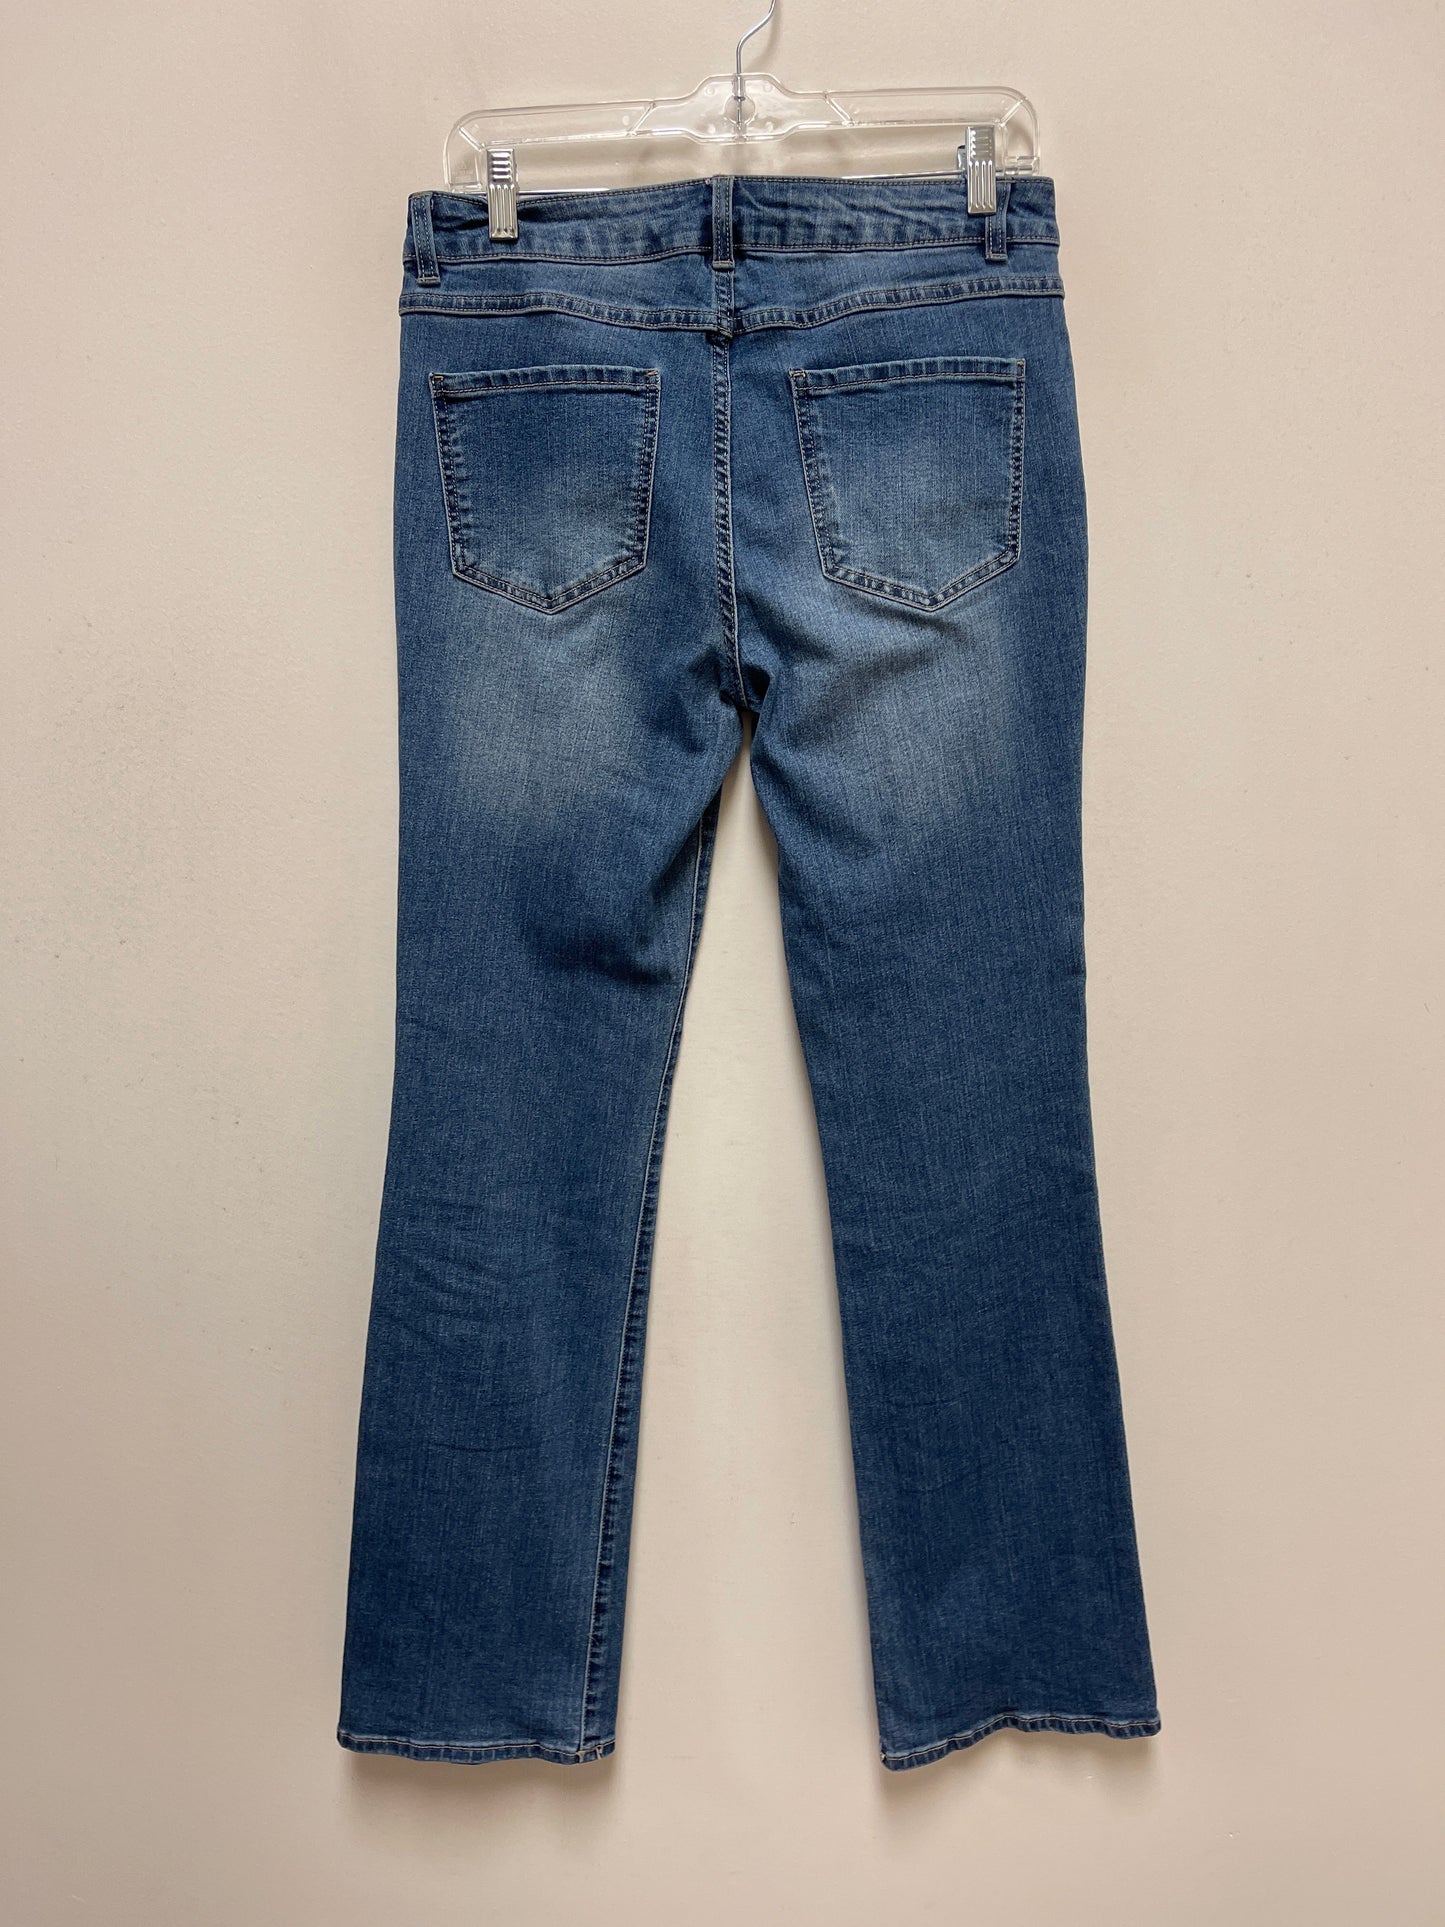 Blue Denim Jeans Flared D Jeans, Size 8